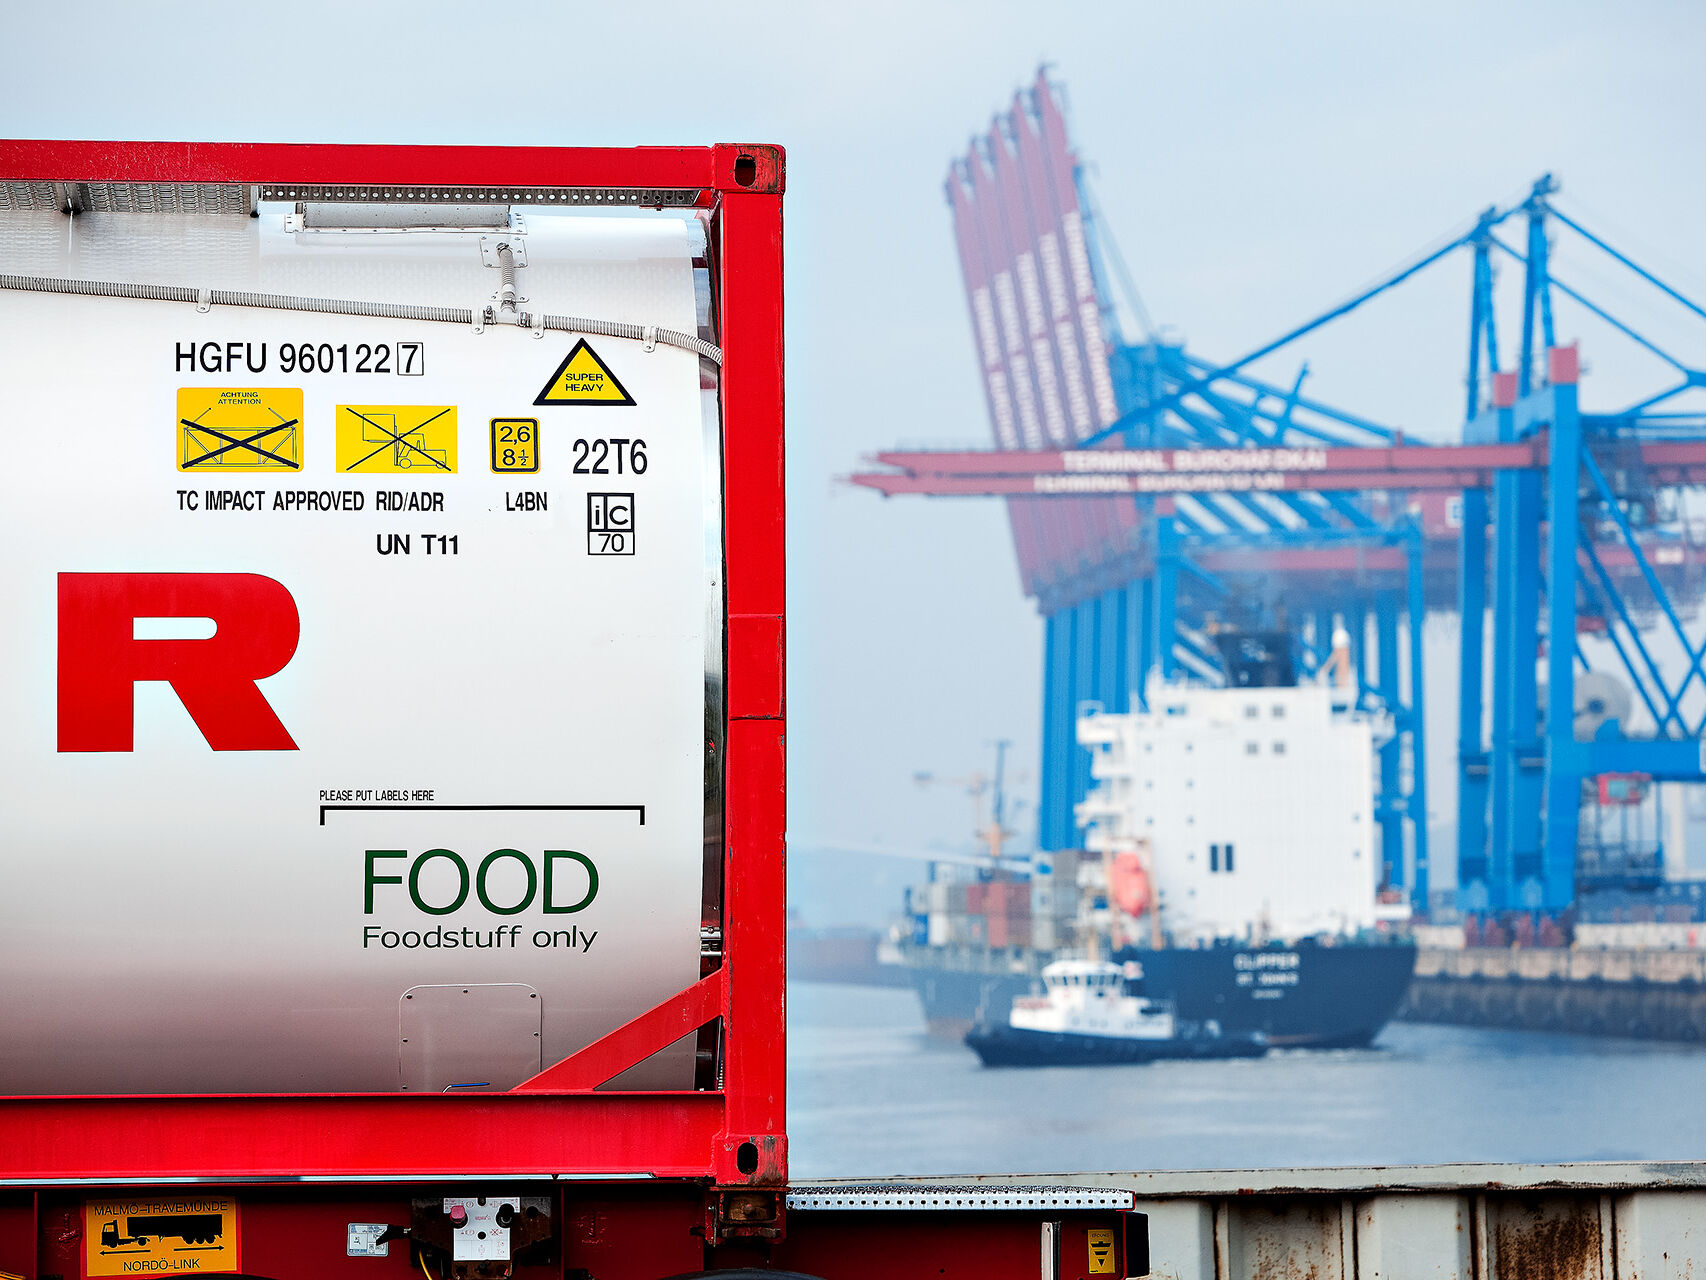 HOYER Group tank container fuer Lebensmittel am Hafen